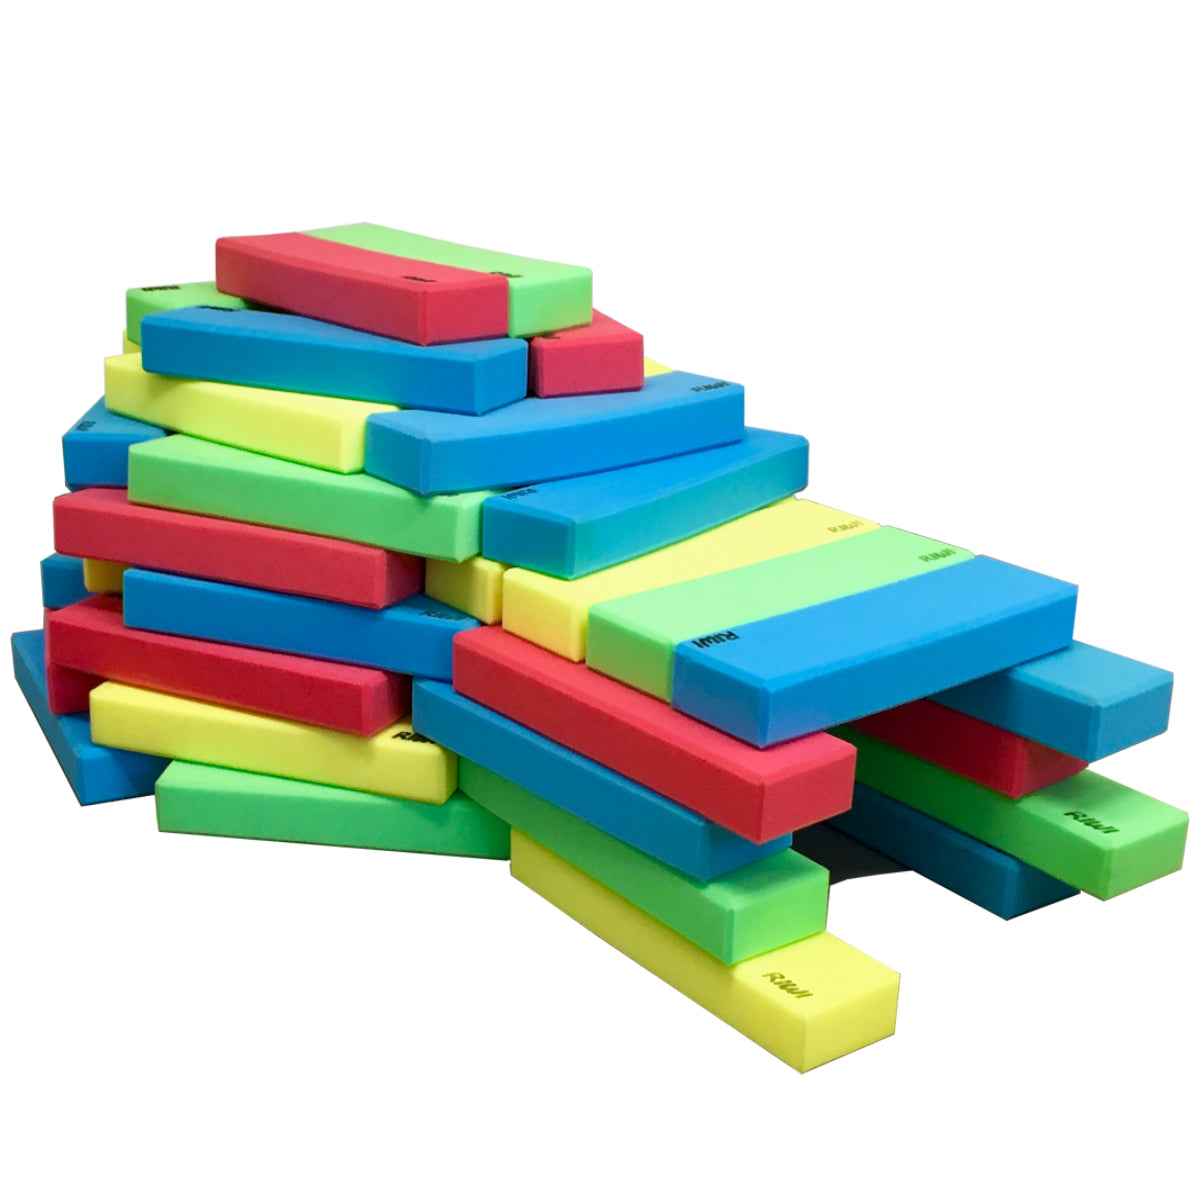 Foam Brick Building Blocks (25 Piece) life-sized blocks